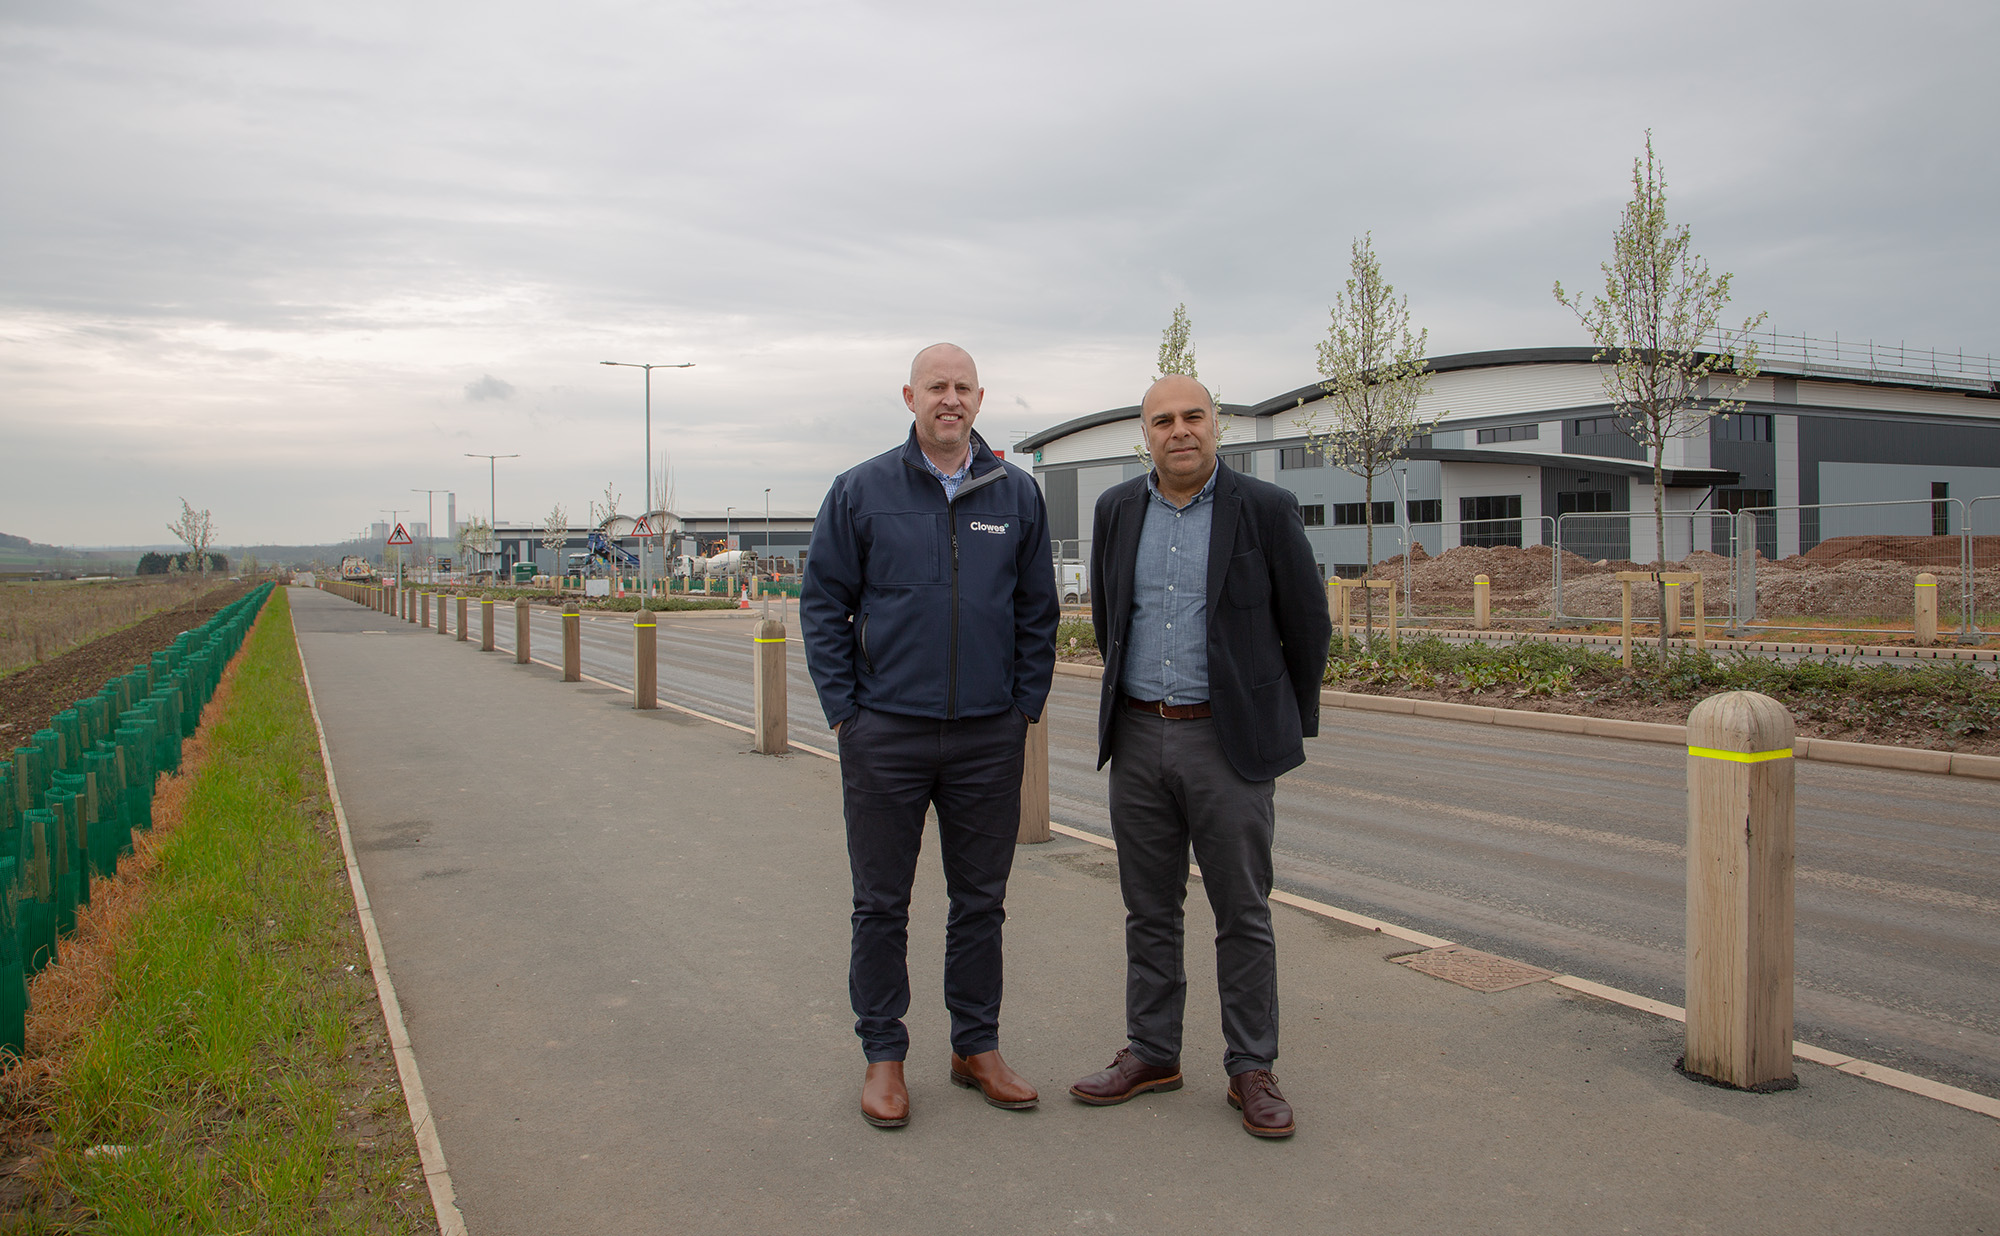 Fairham Business Park Two men stood on pavement outside an industrial unit